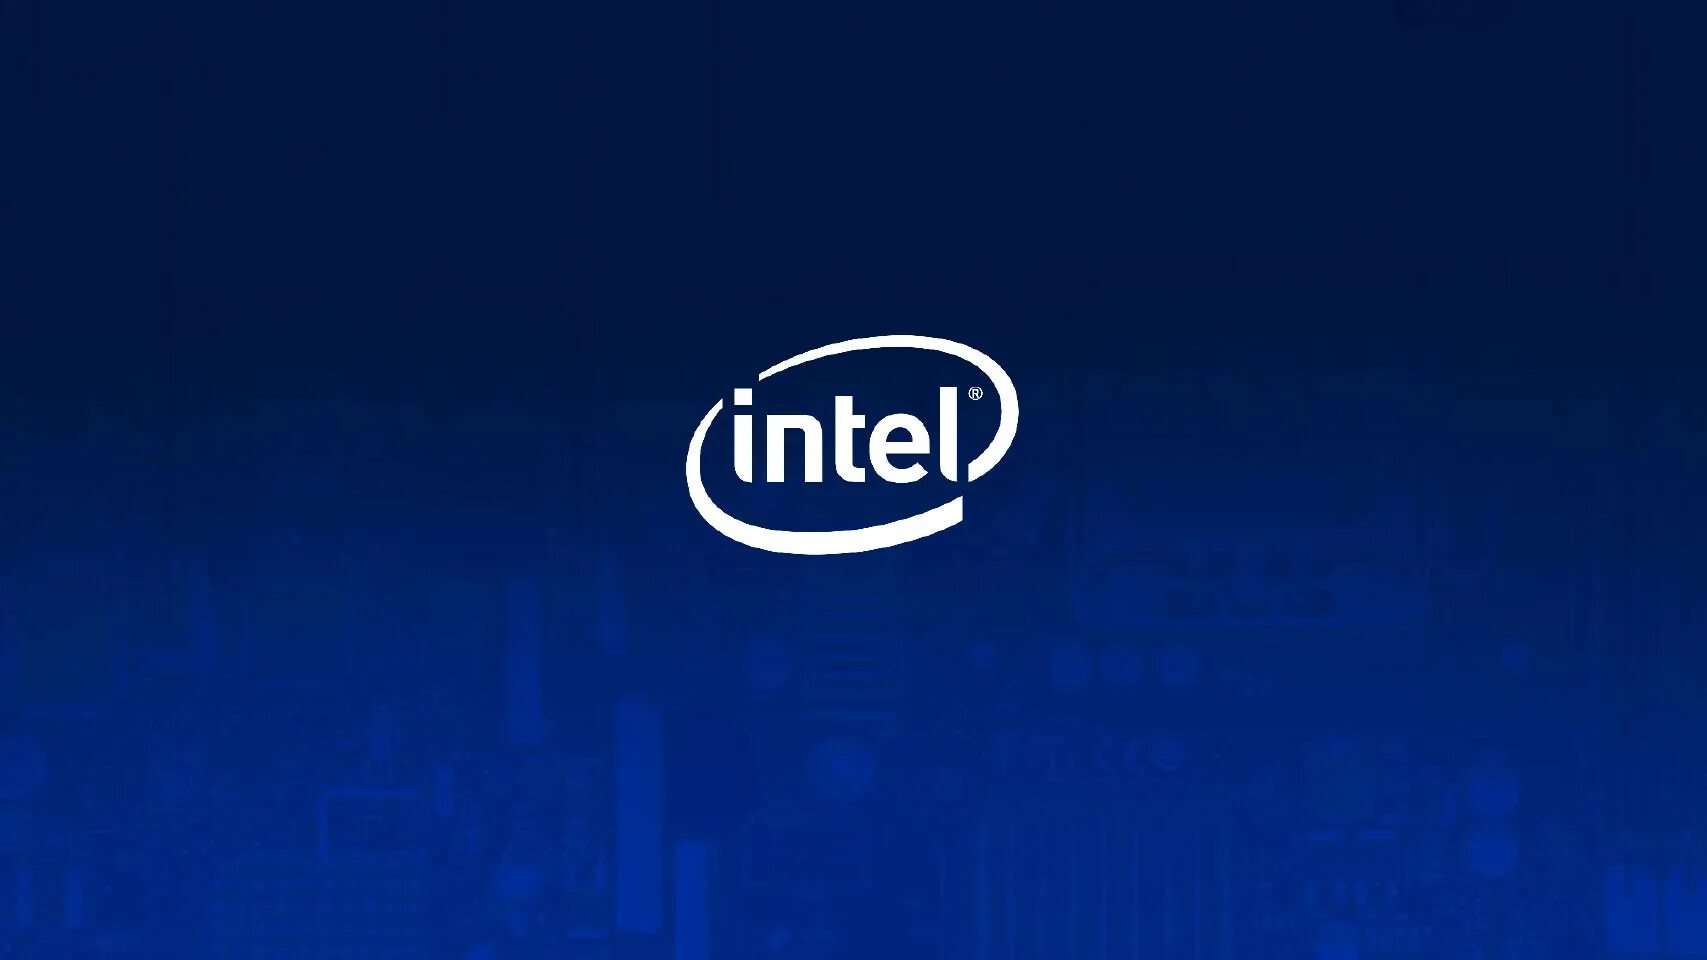 Обои Intel Core i5. Логотип Intel. Intel обложка. Слоган Интел. Intel оф сайт